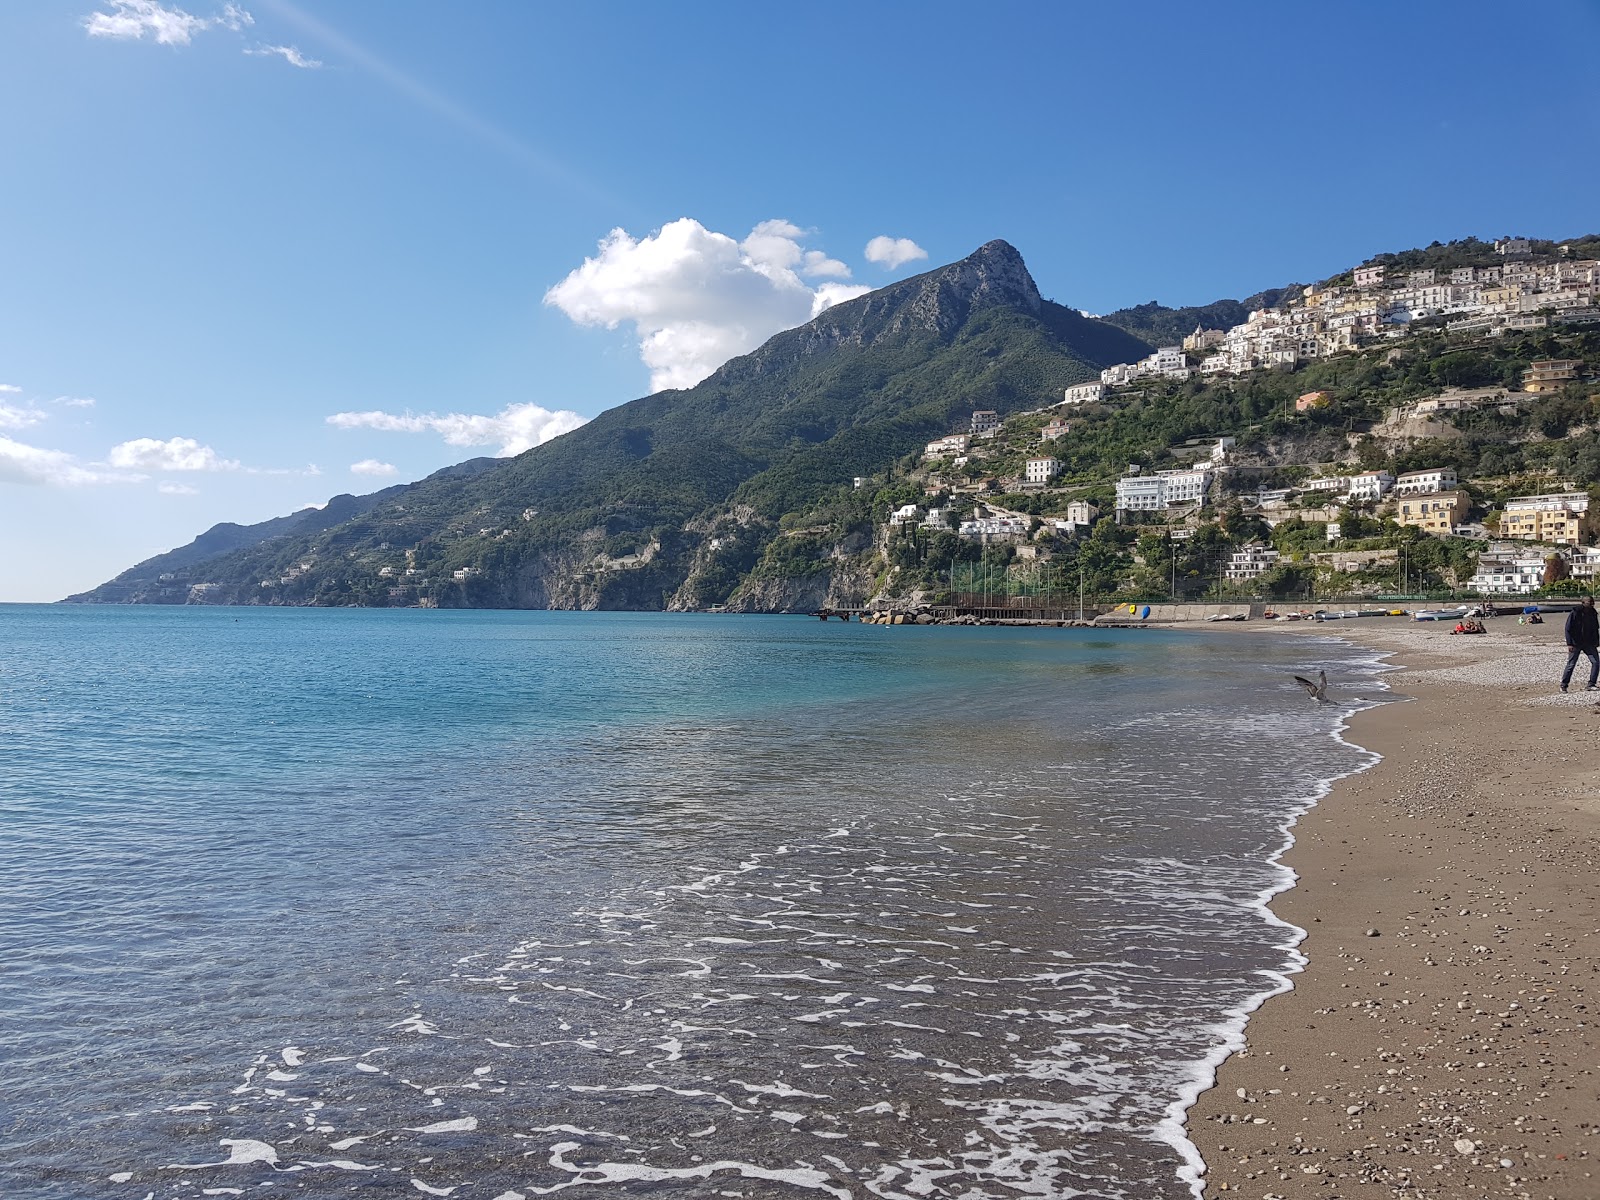 Foto av Spiaggia Vietri sul Mare med brunsand yta